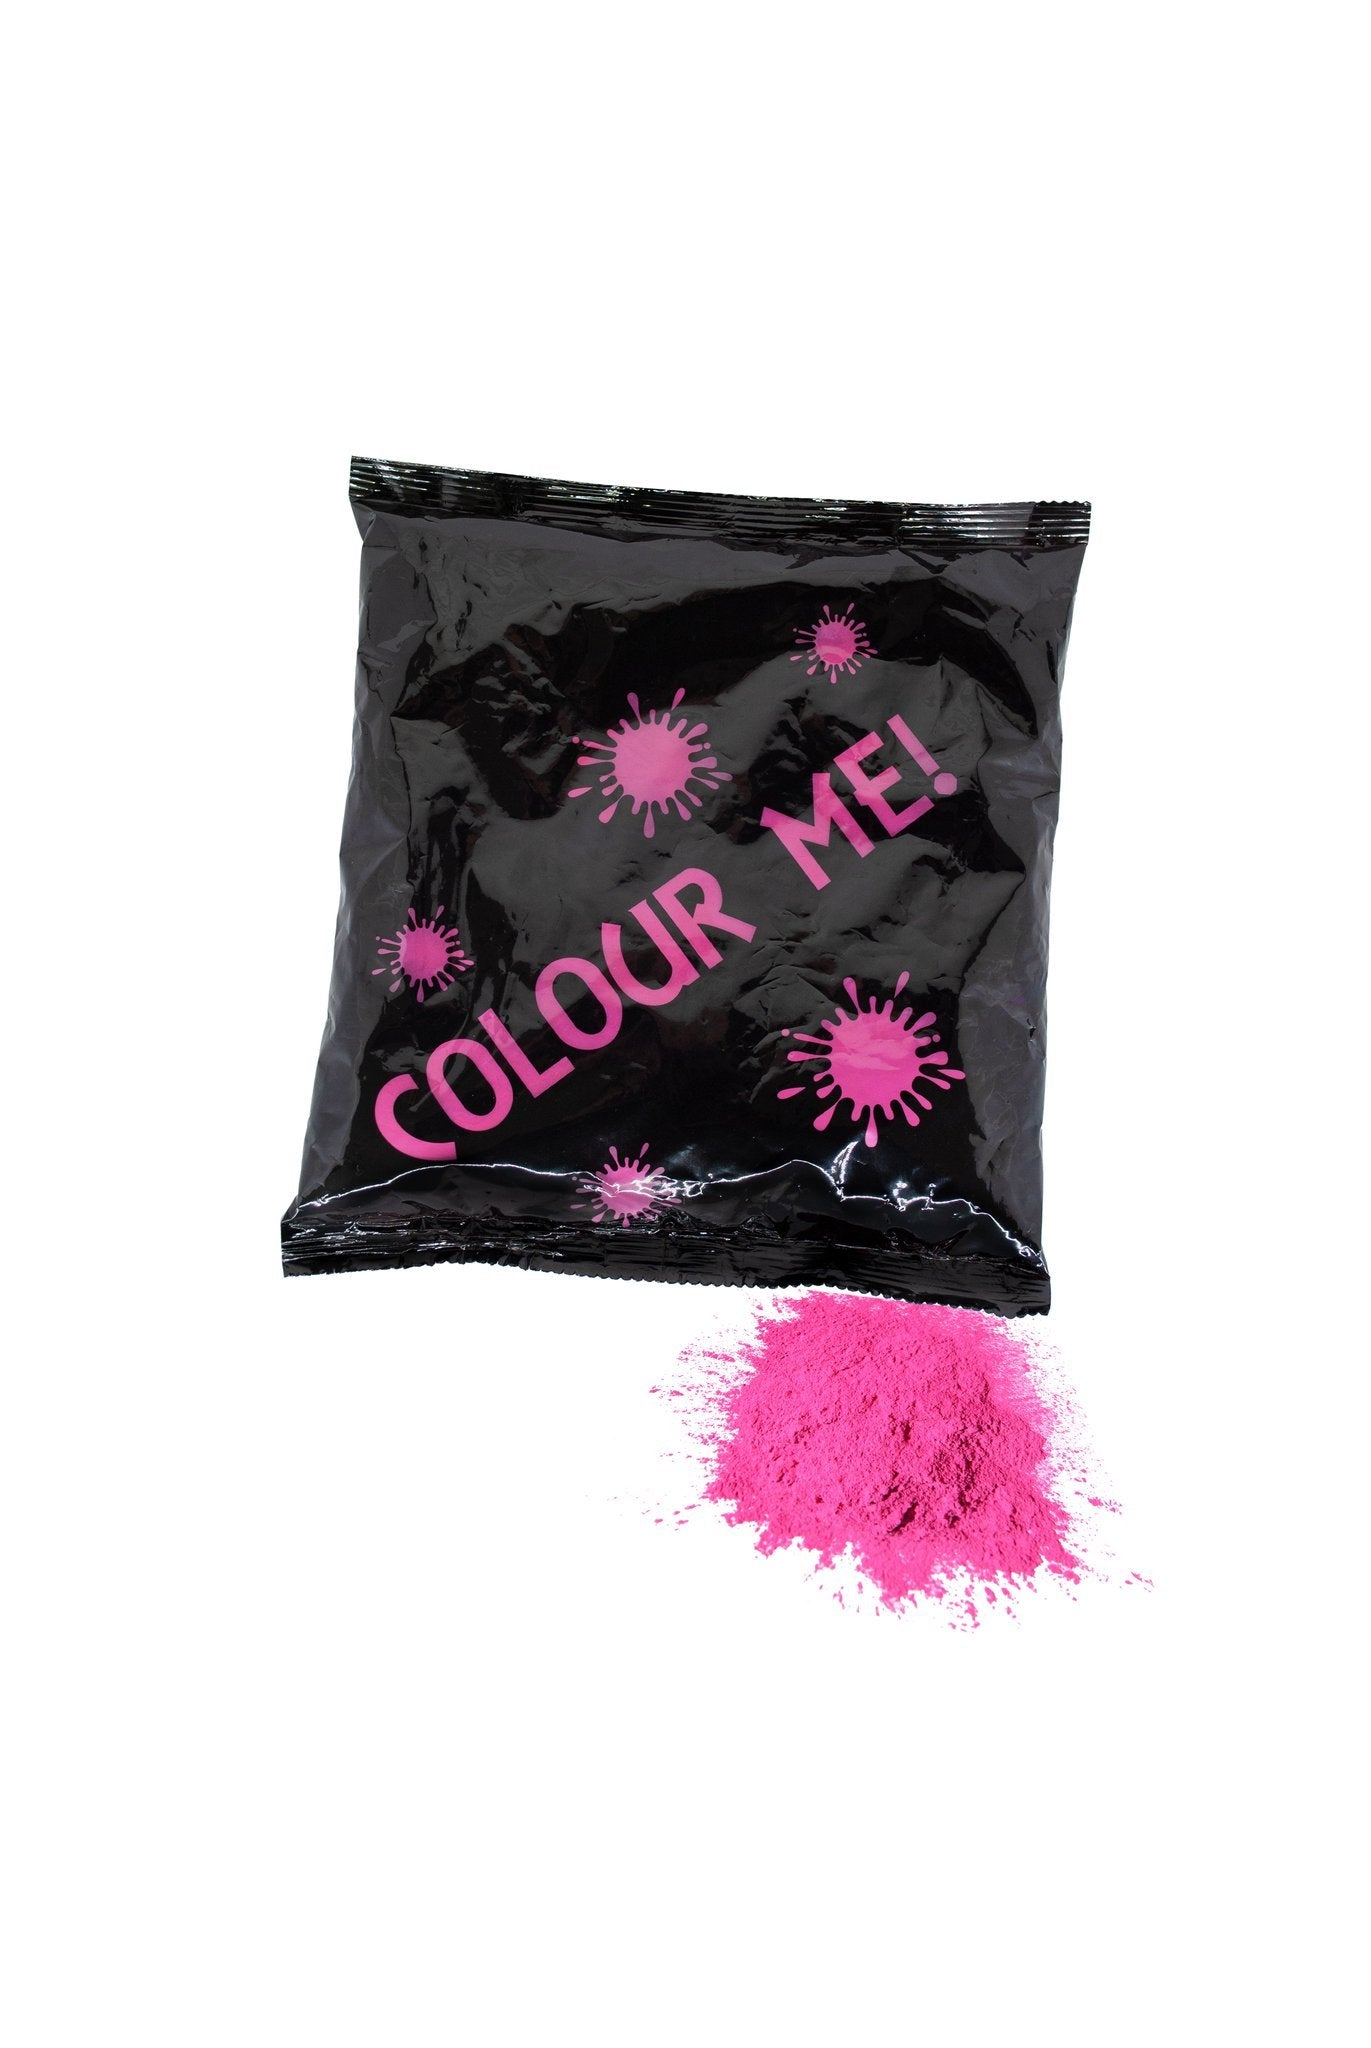 Coloured Holi Powder Pink 500g